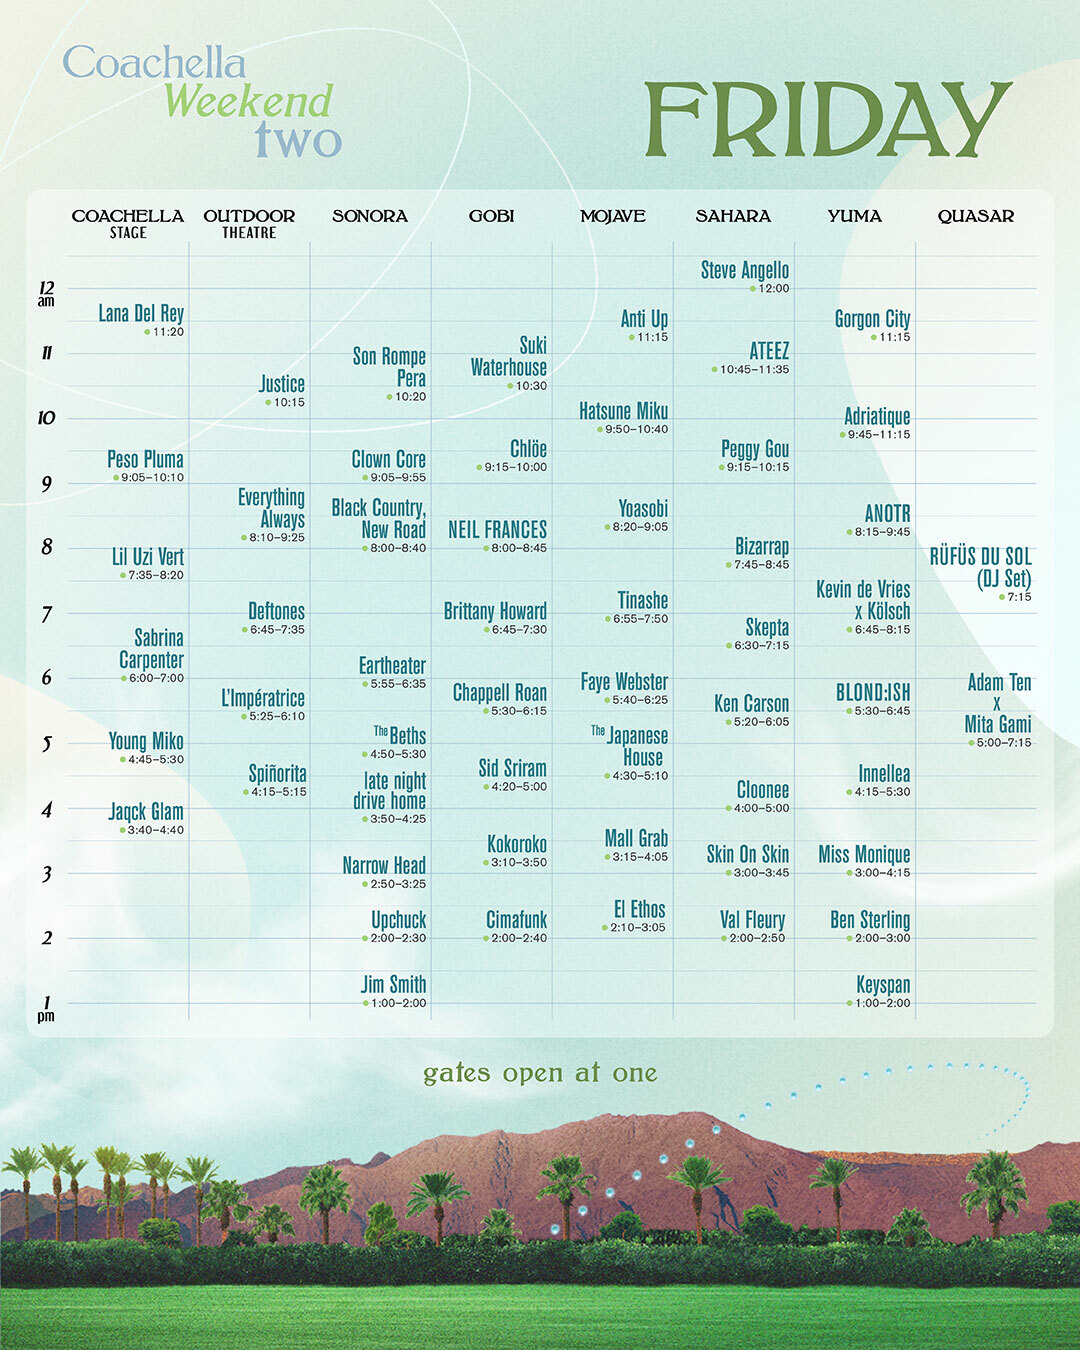 Coachella weekend two Friday schedule